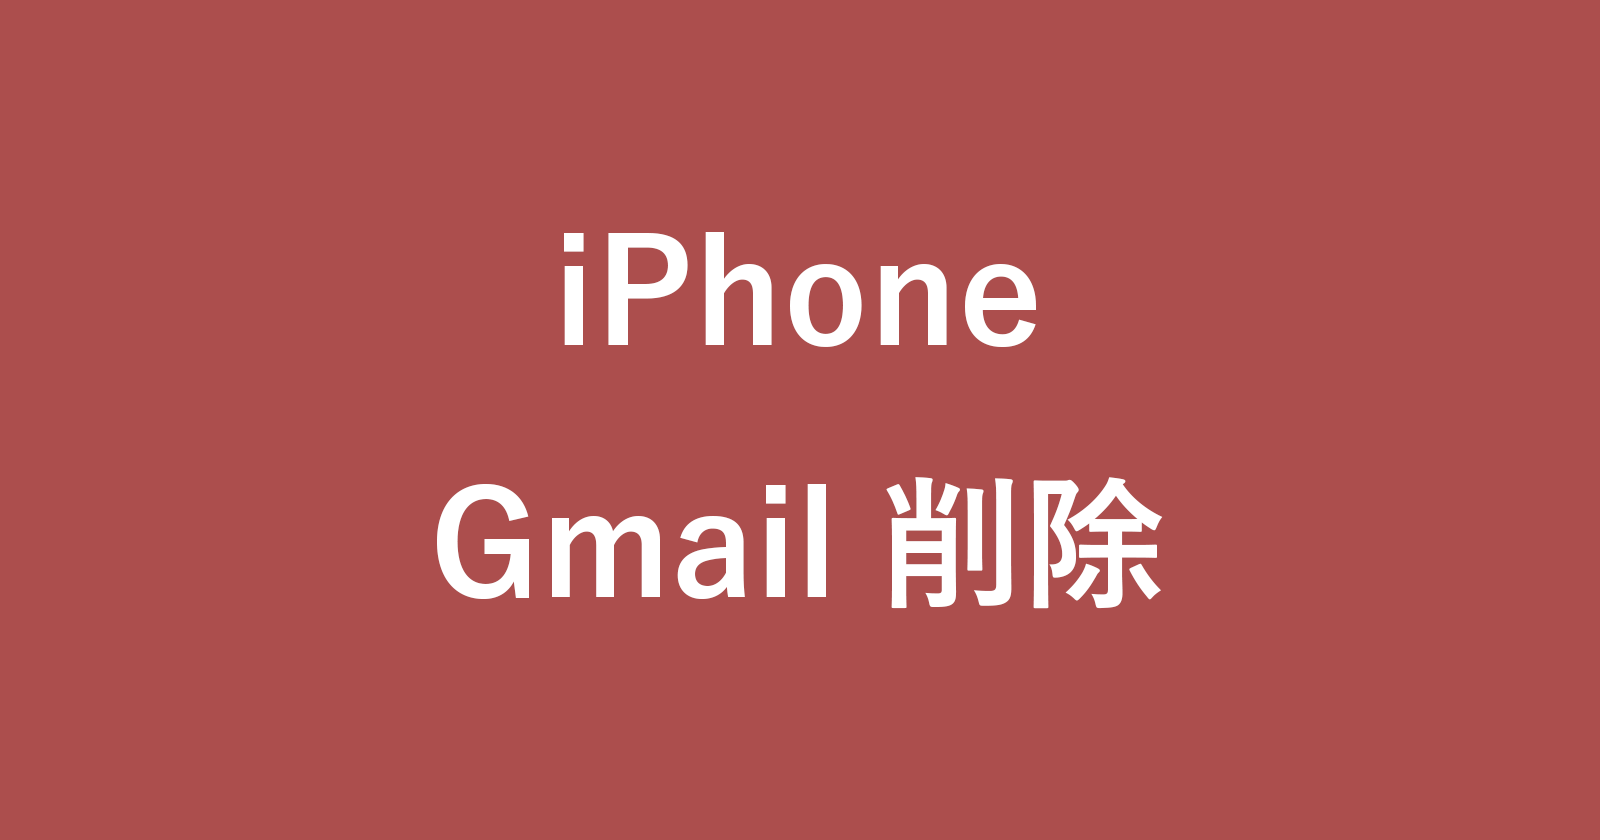 iphone delete gmail account